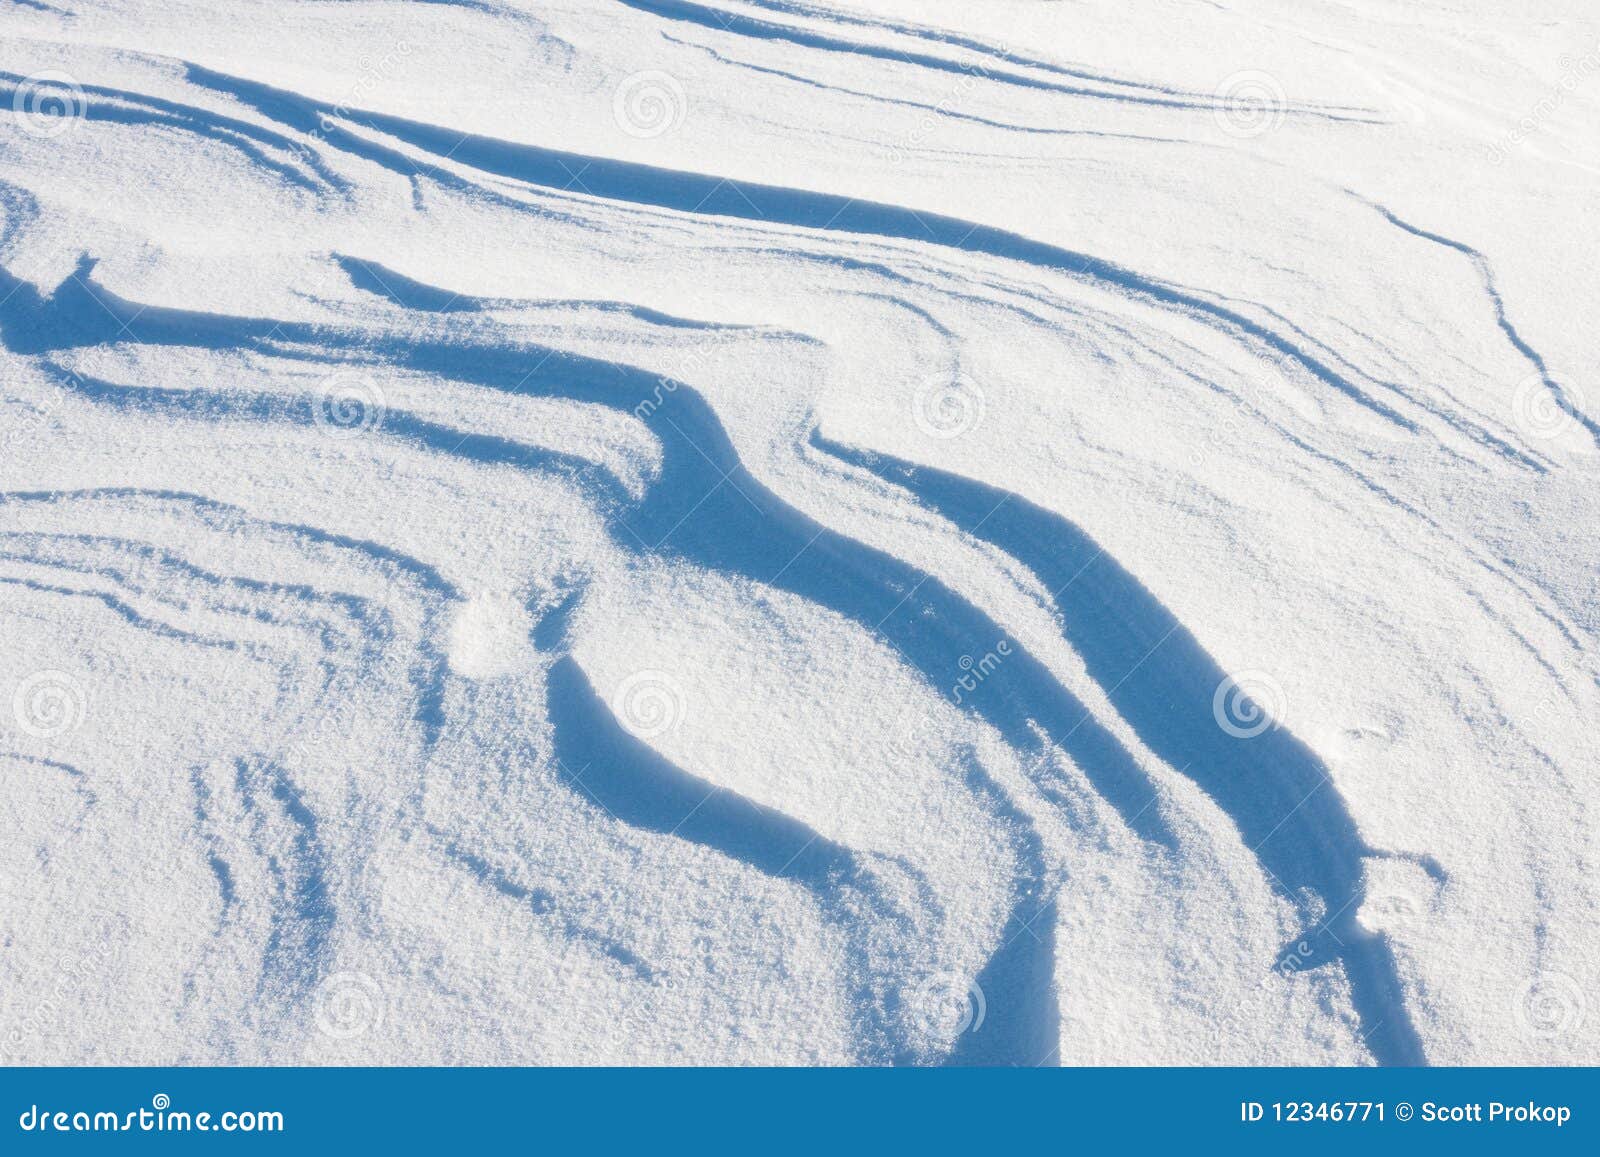 clipart snow drifts - photo #33